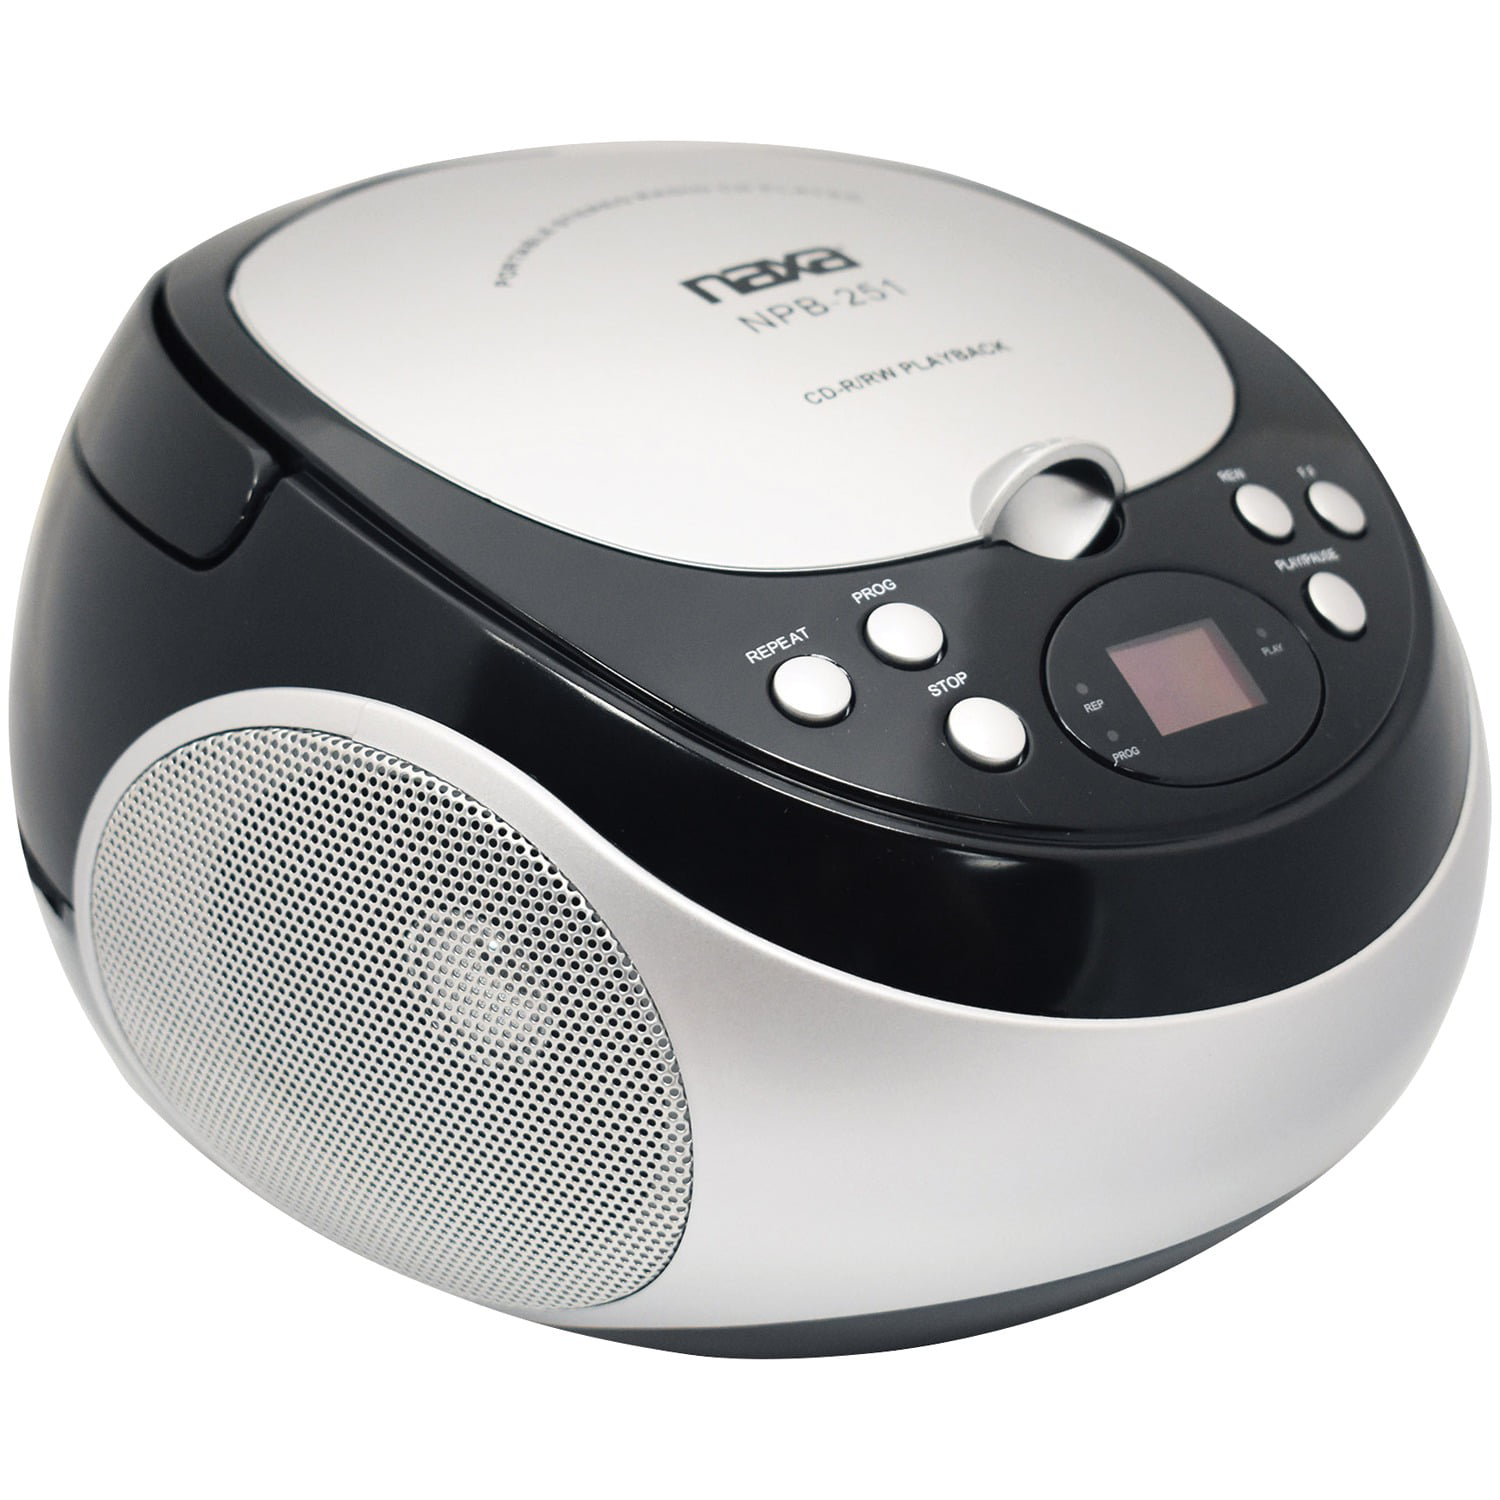 Naxa NPB251 Portable CD Player with AM/FM Radio - Black